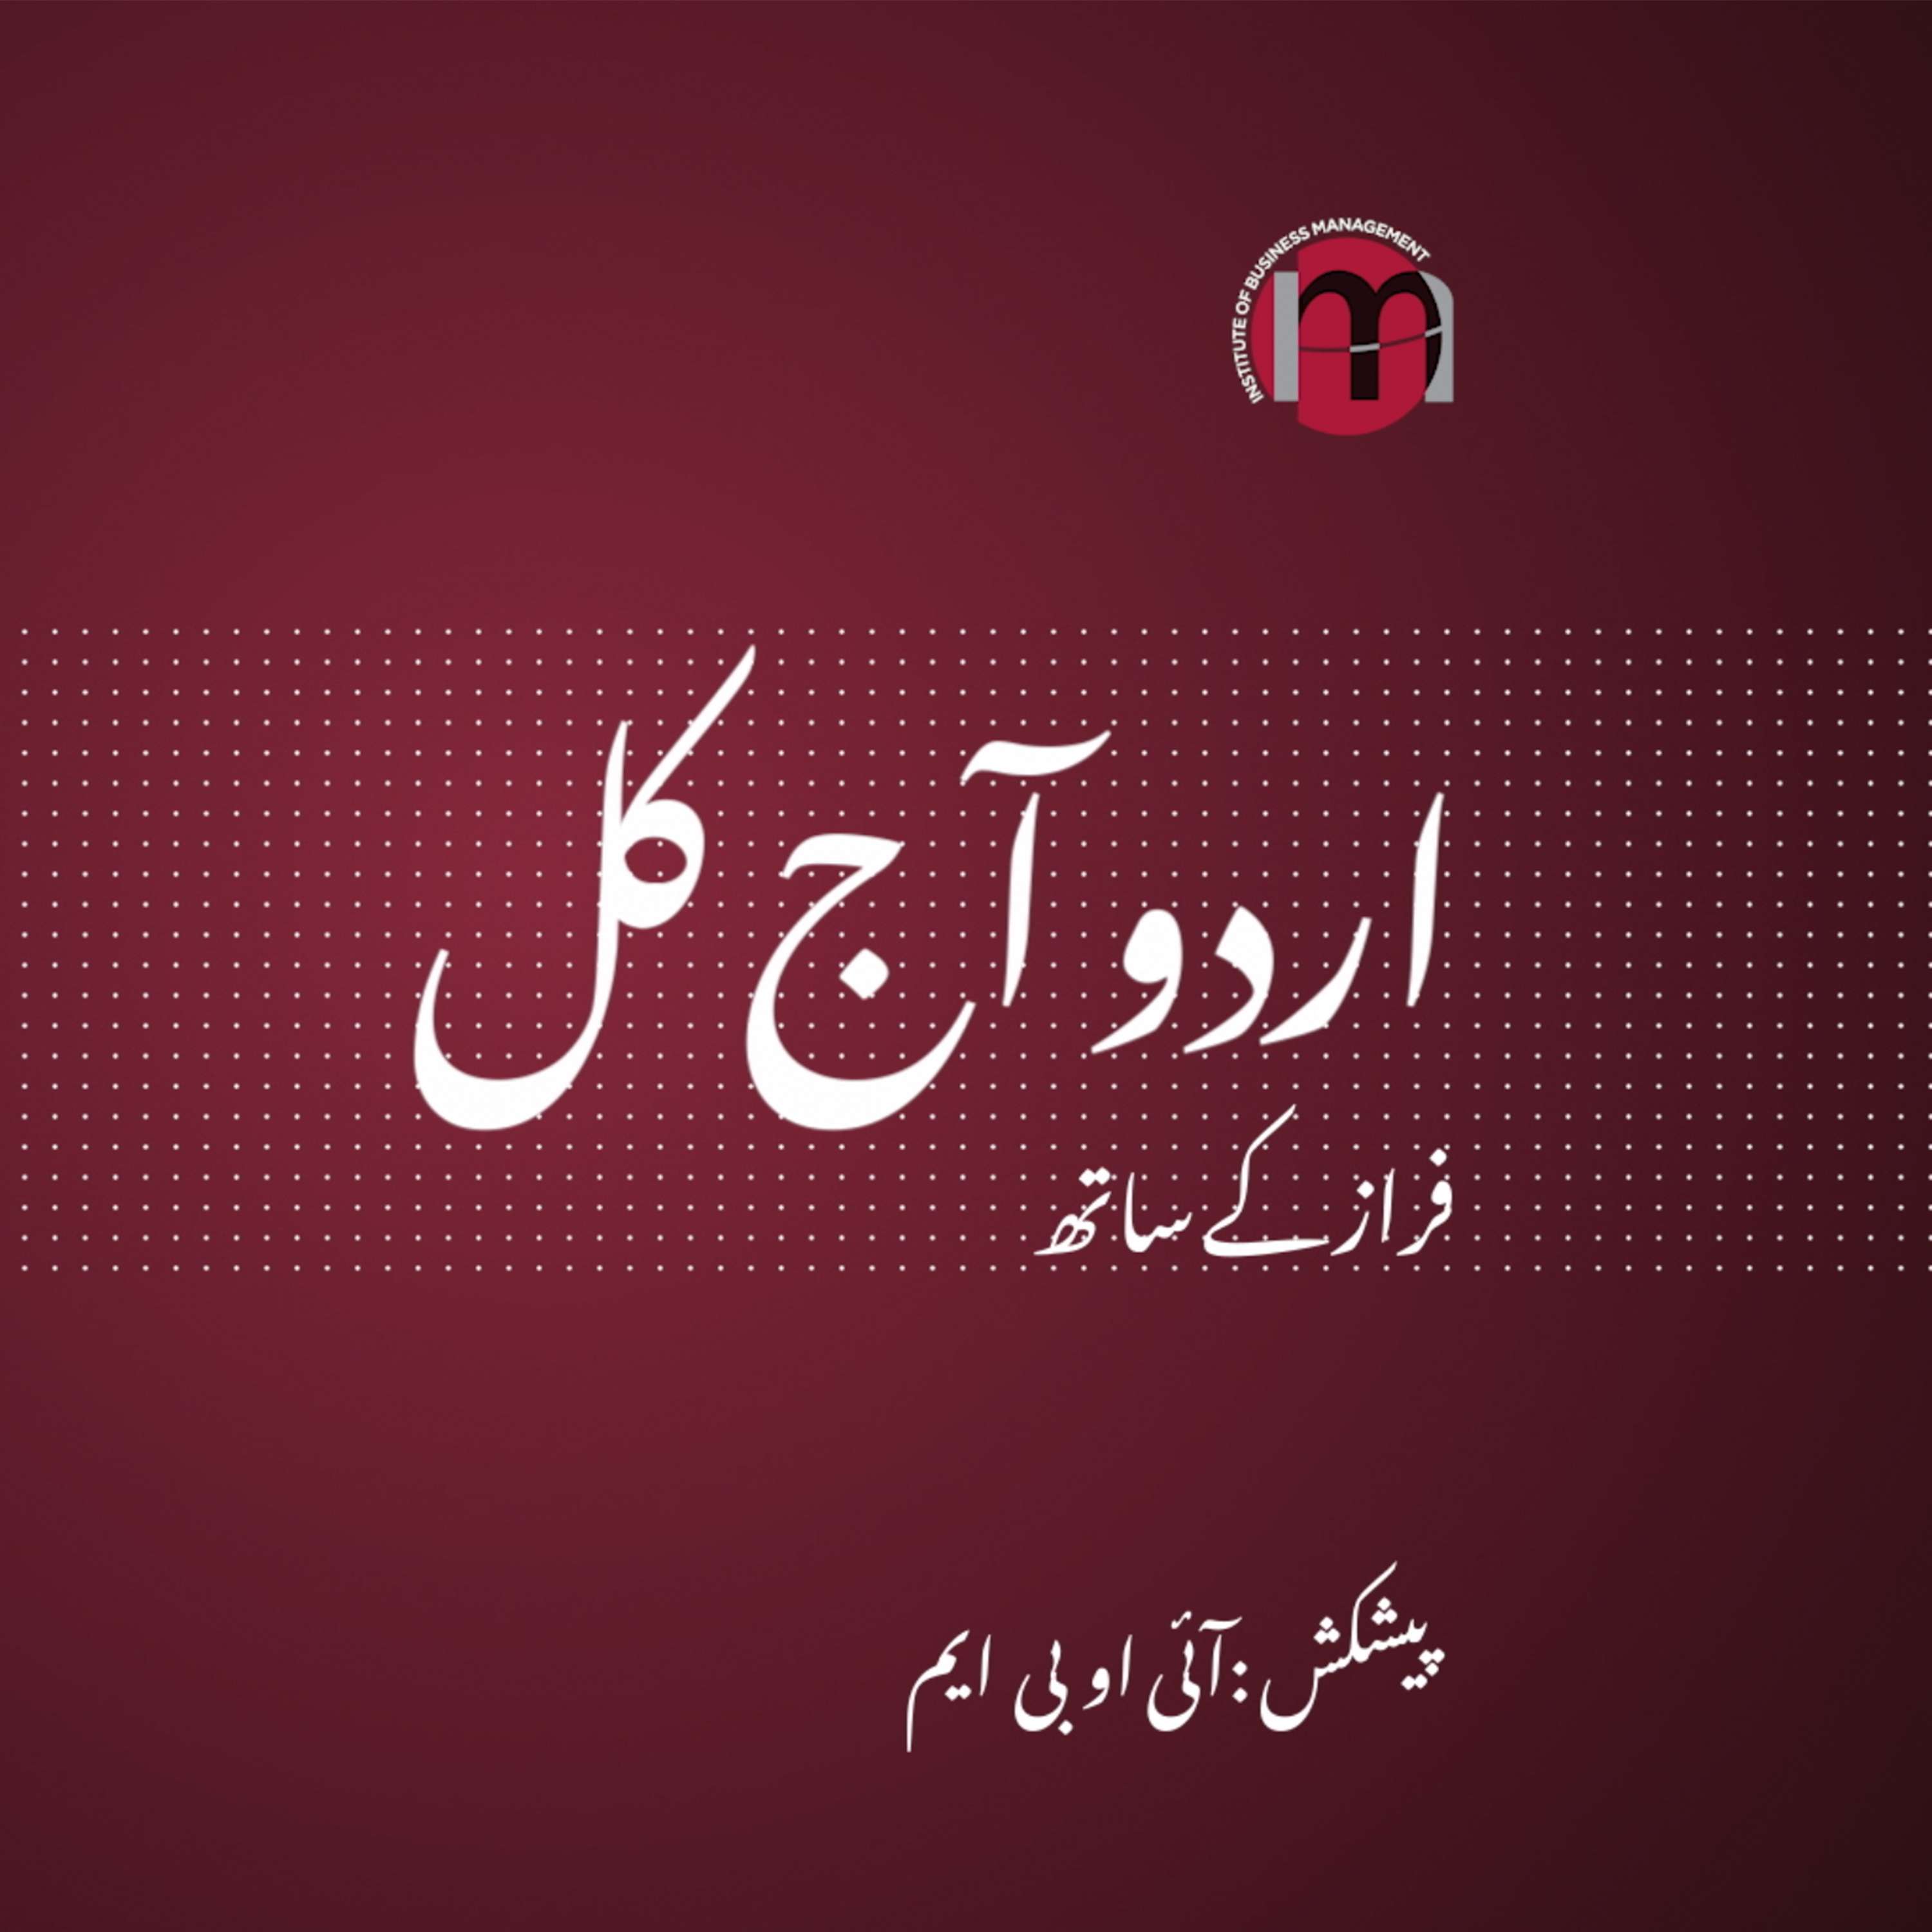 Arif Bahalim | Preservation of Urdu